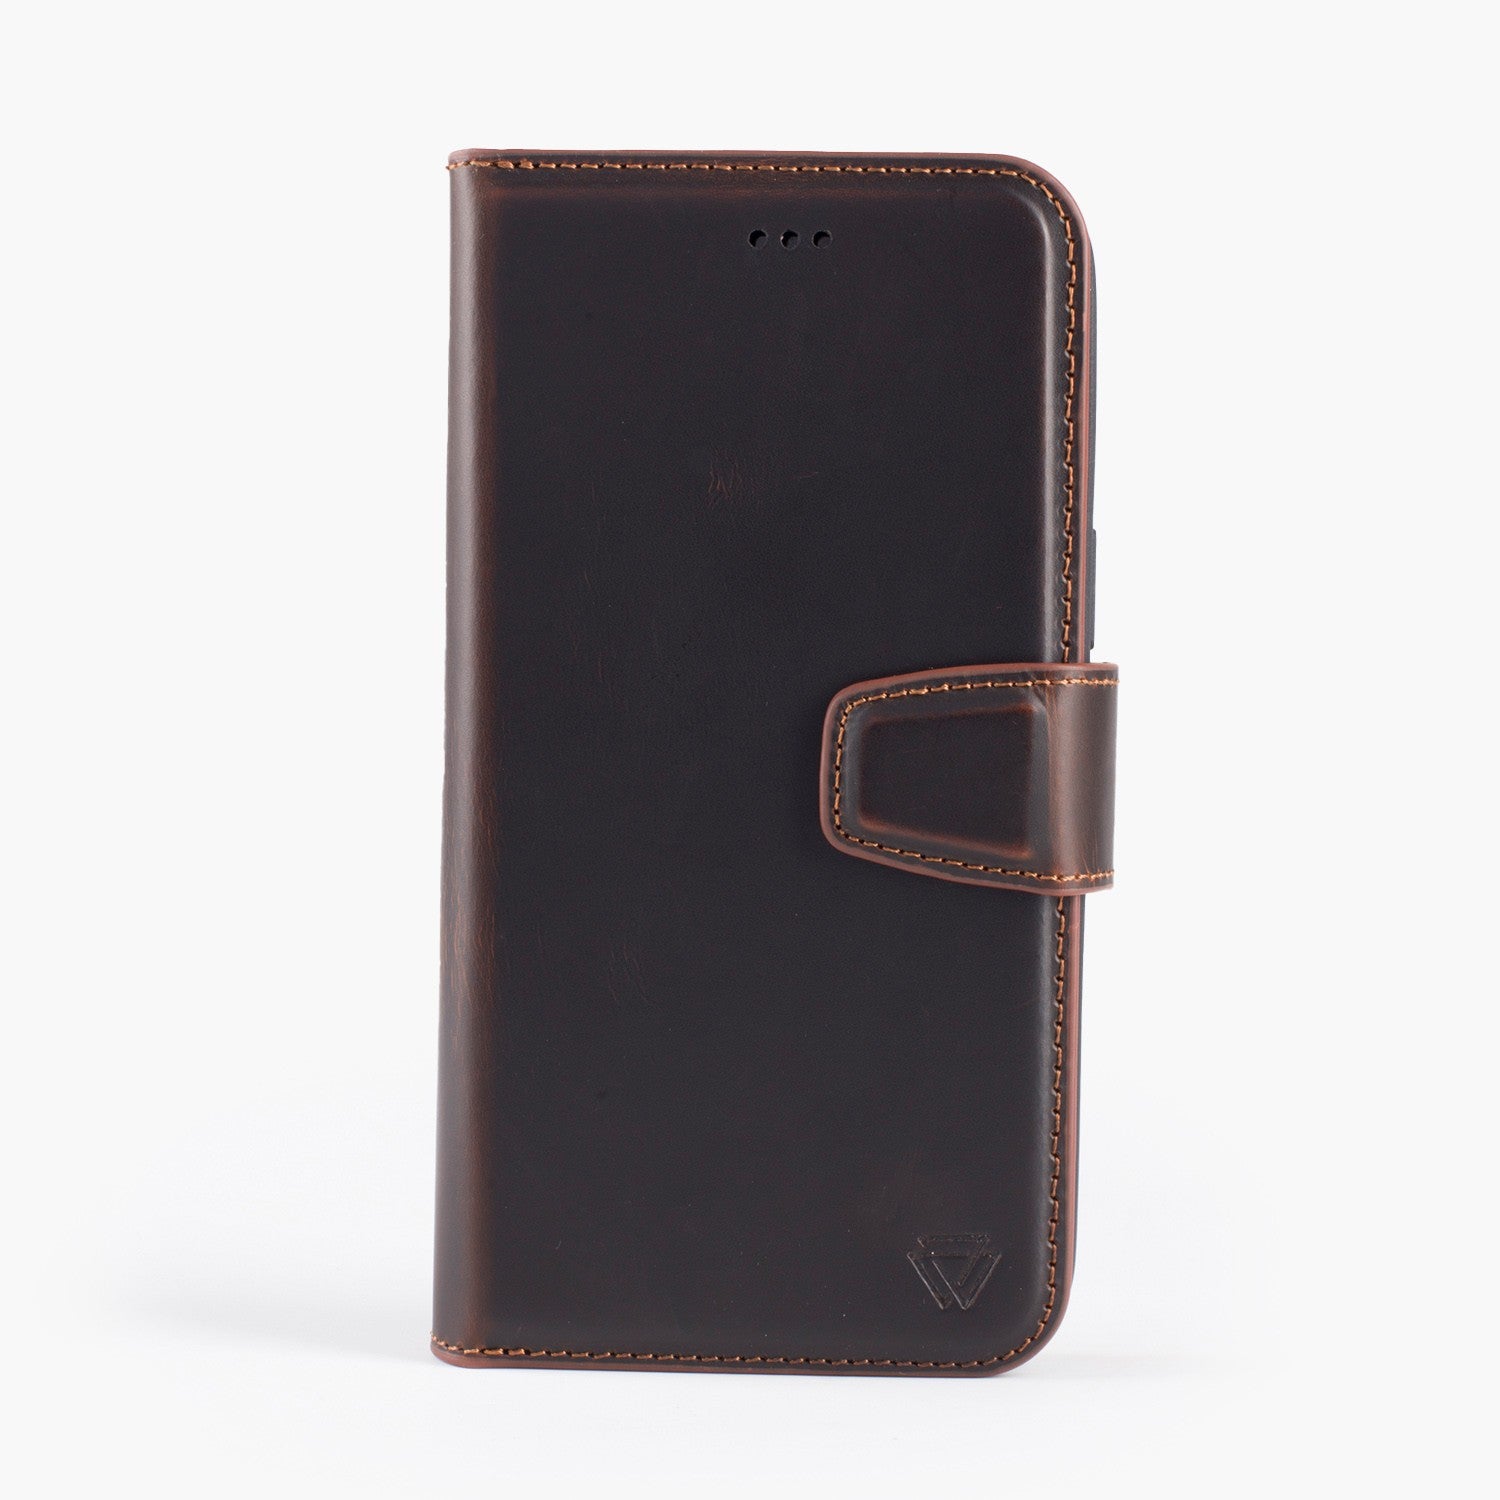 Wachikopa leather Magic Book Case 2 in 1 for iPhone 11 Pro Max Dark Brown